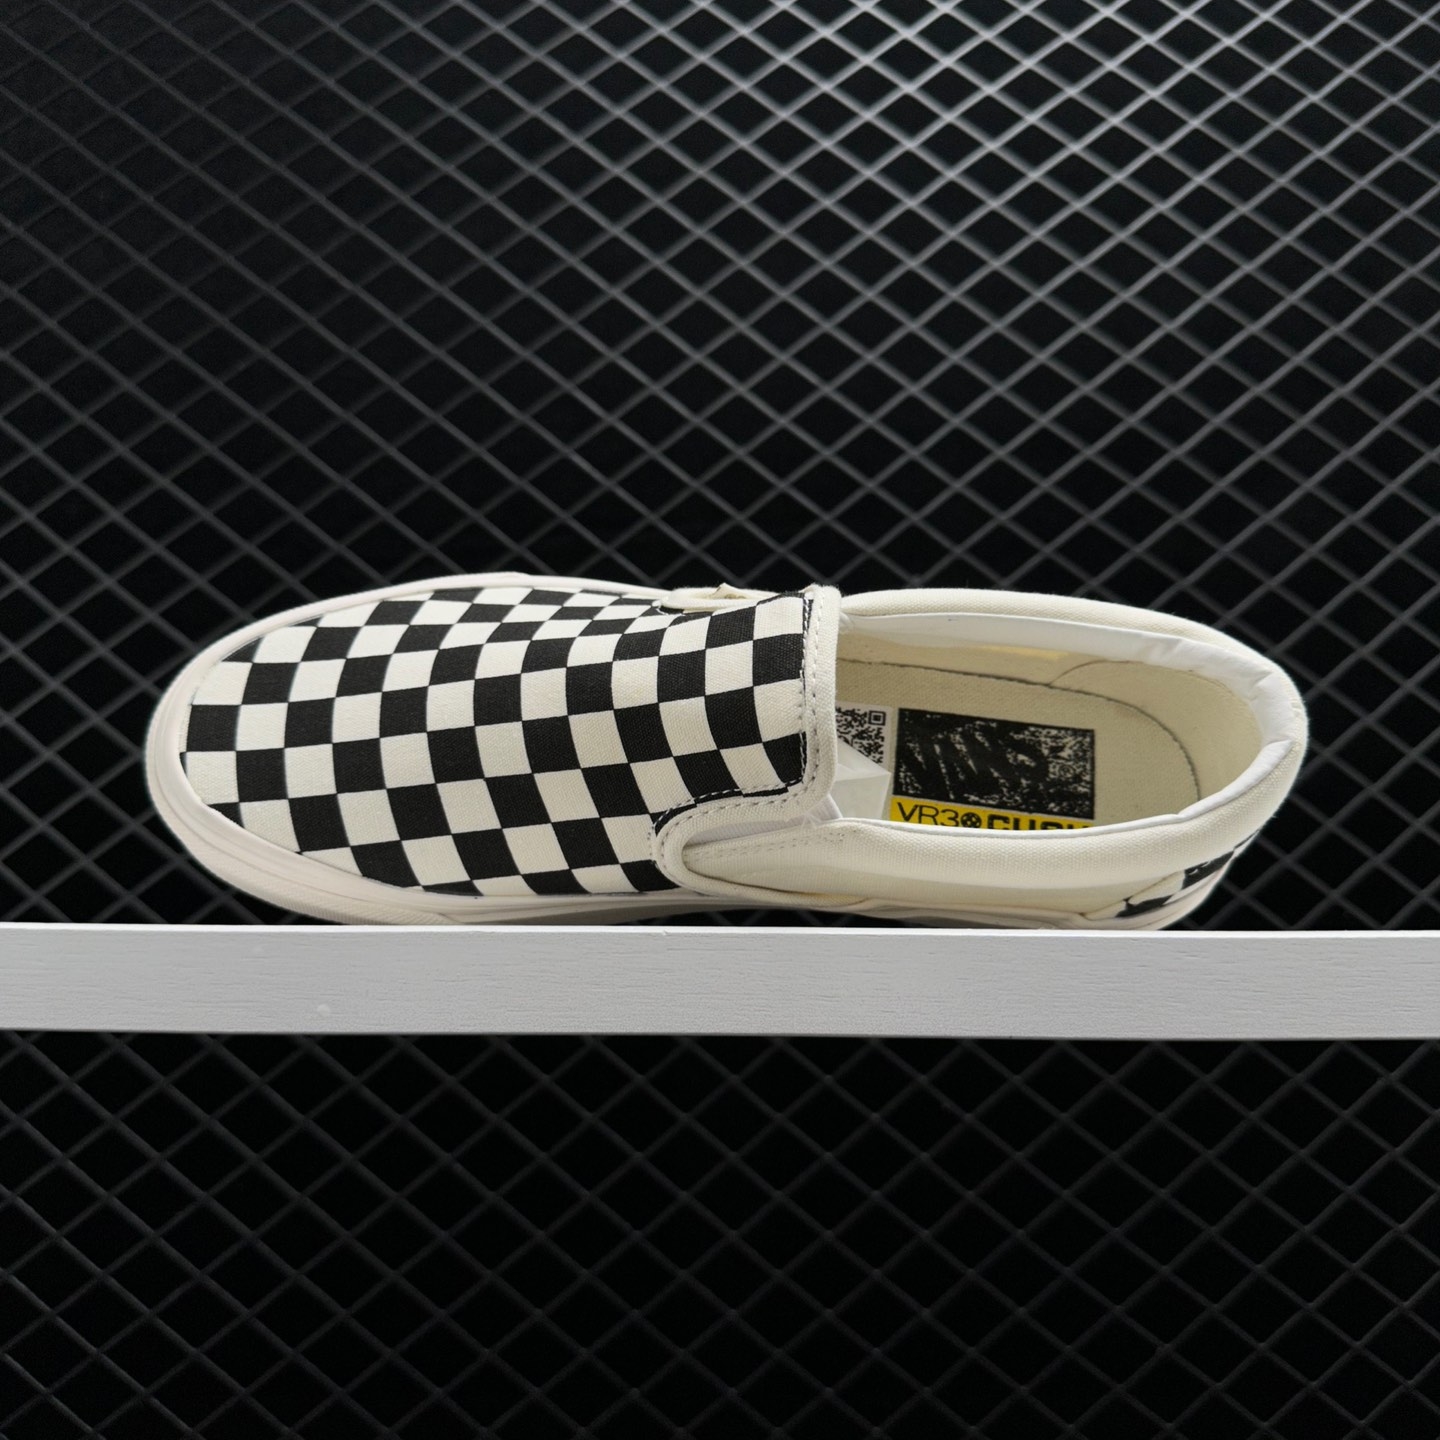 Vans Slip-On VR3 Checkerboard 'Black White' VN0007NC1KP - Stylish and Versatile Slip-On Sneakers